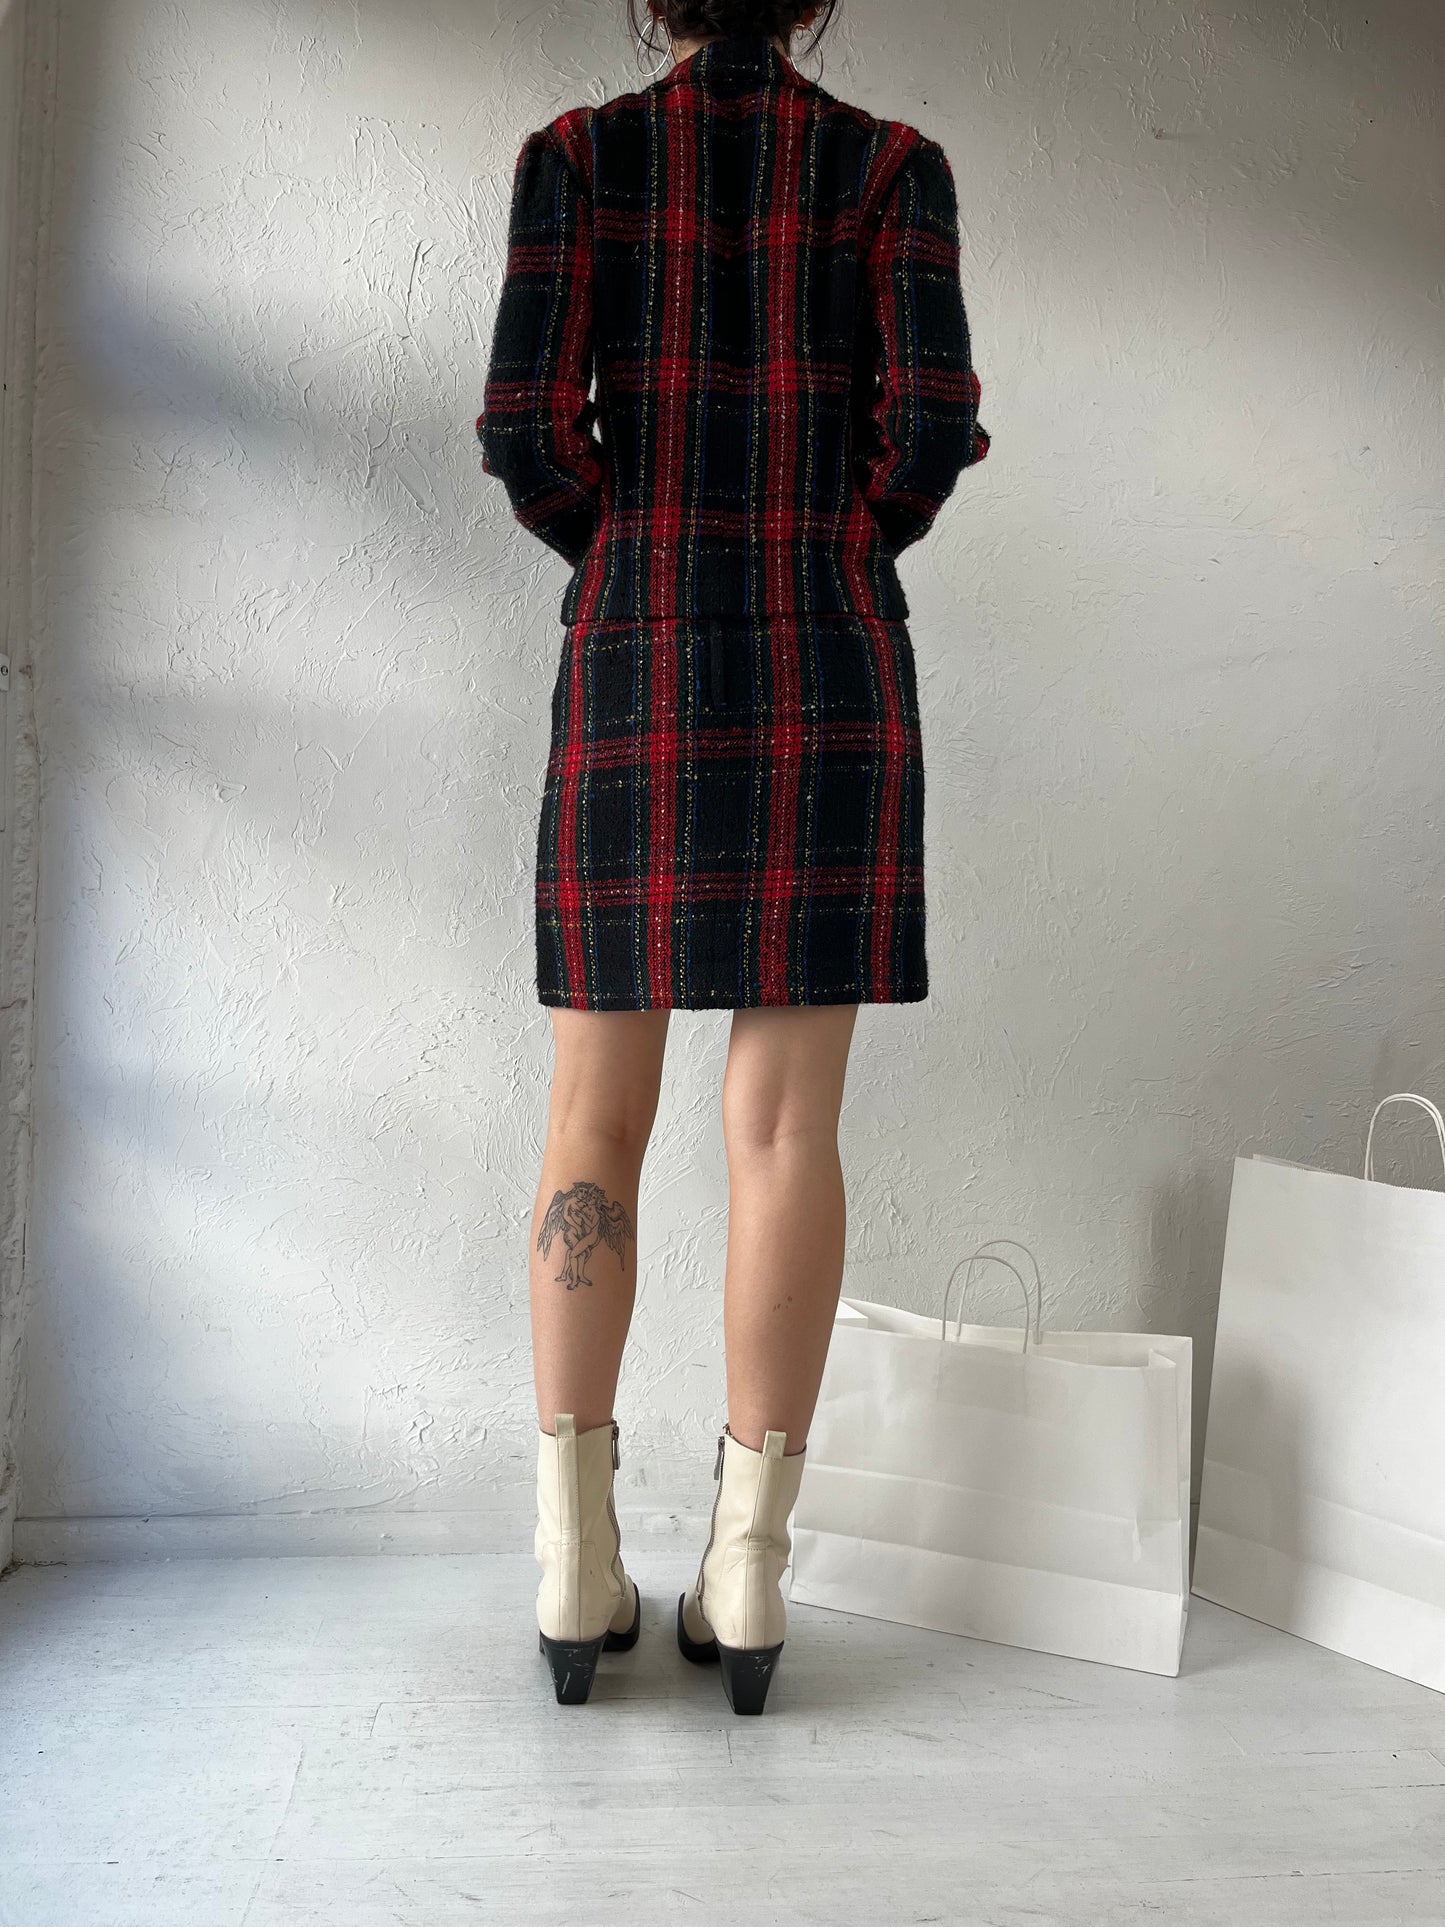 Y2k 'Cynthia Howie' Plaid Skirt Blazer Set / Small